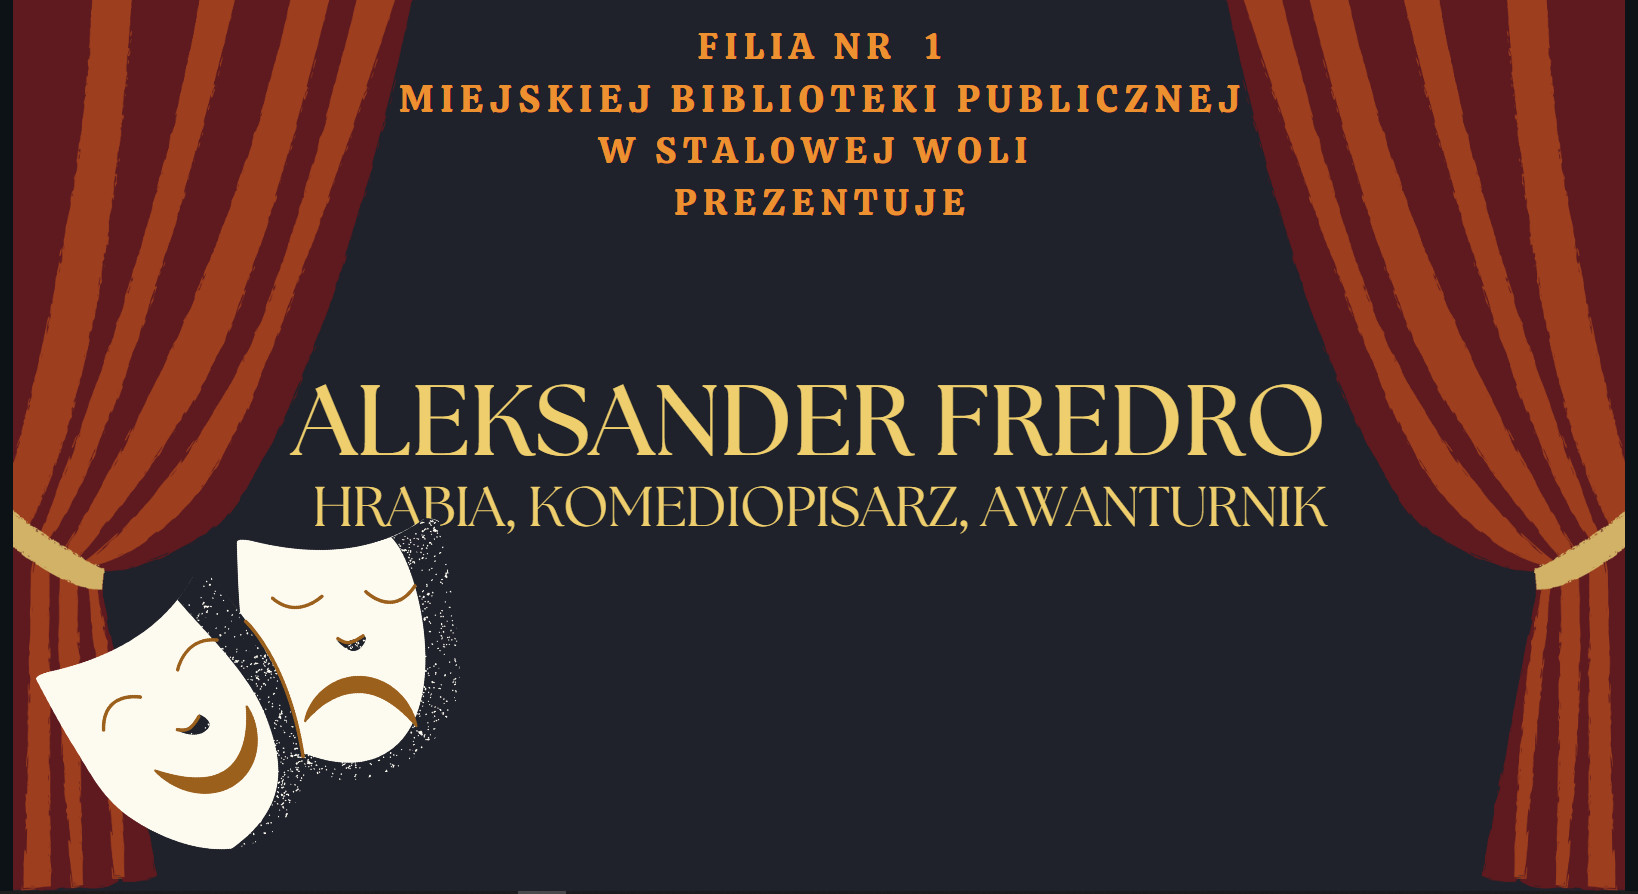 F1: Aleksander Fredro: hrabia, komediopisarz, awanturnik